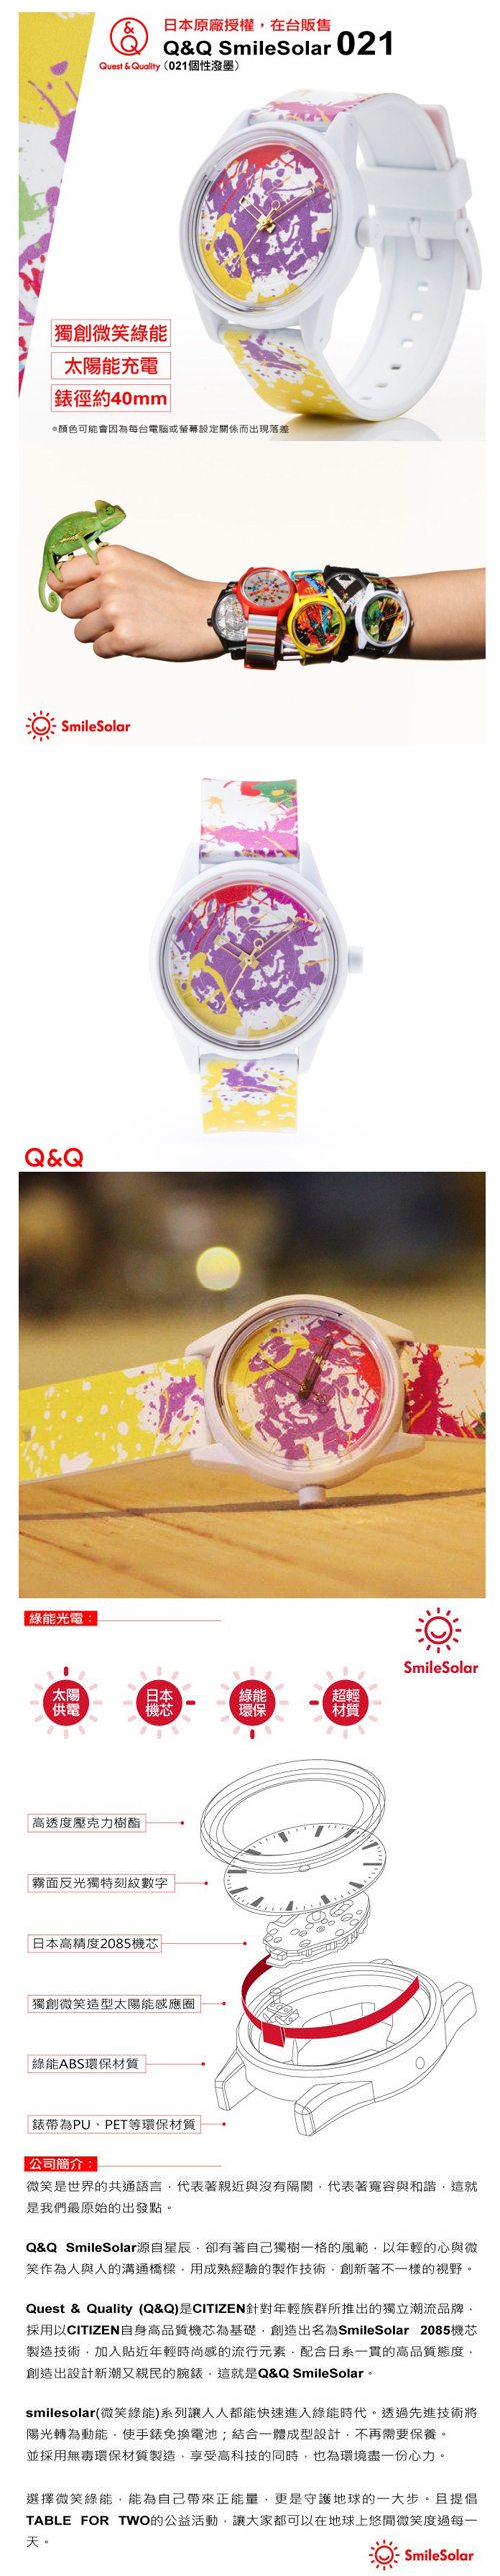 Q＆Q SmileSolar 仲夏狂熱SUMMER款 太陽能手錶 (021 個性潑墨/40mm)